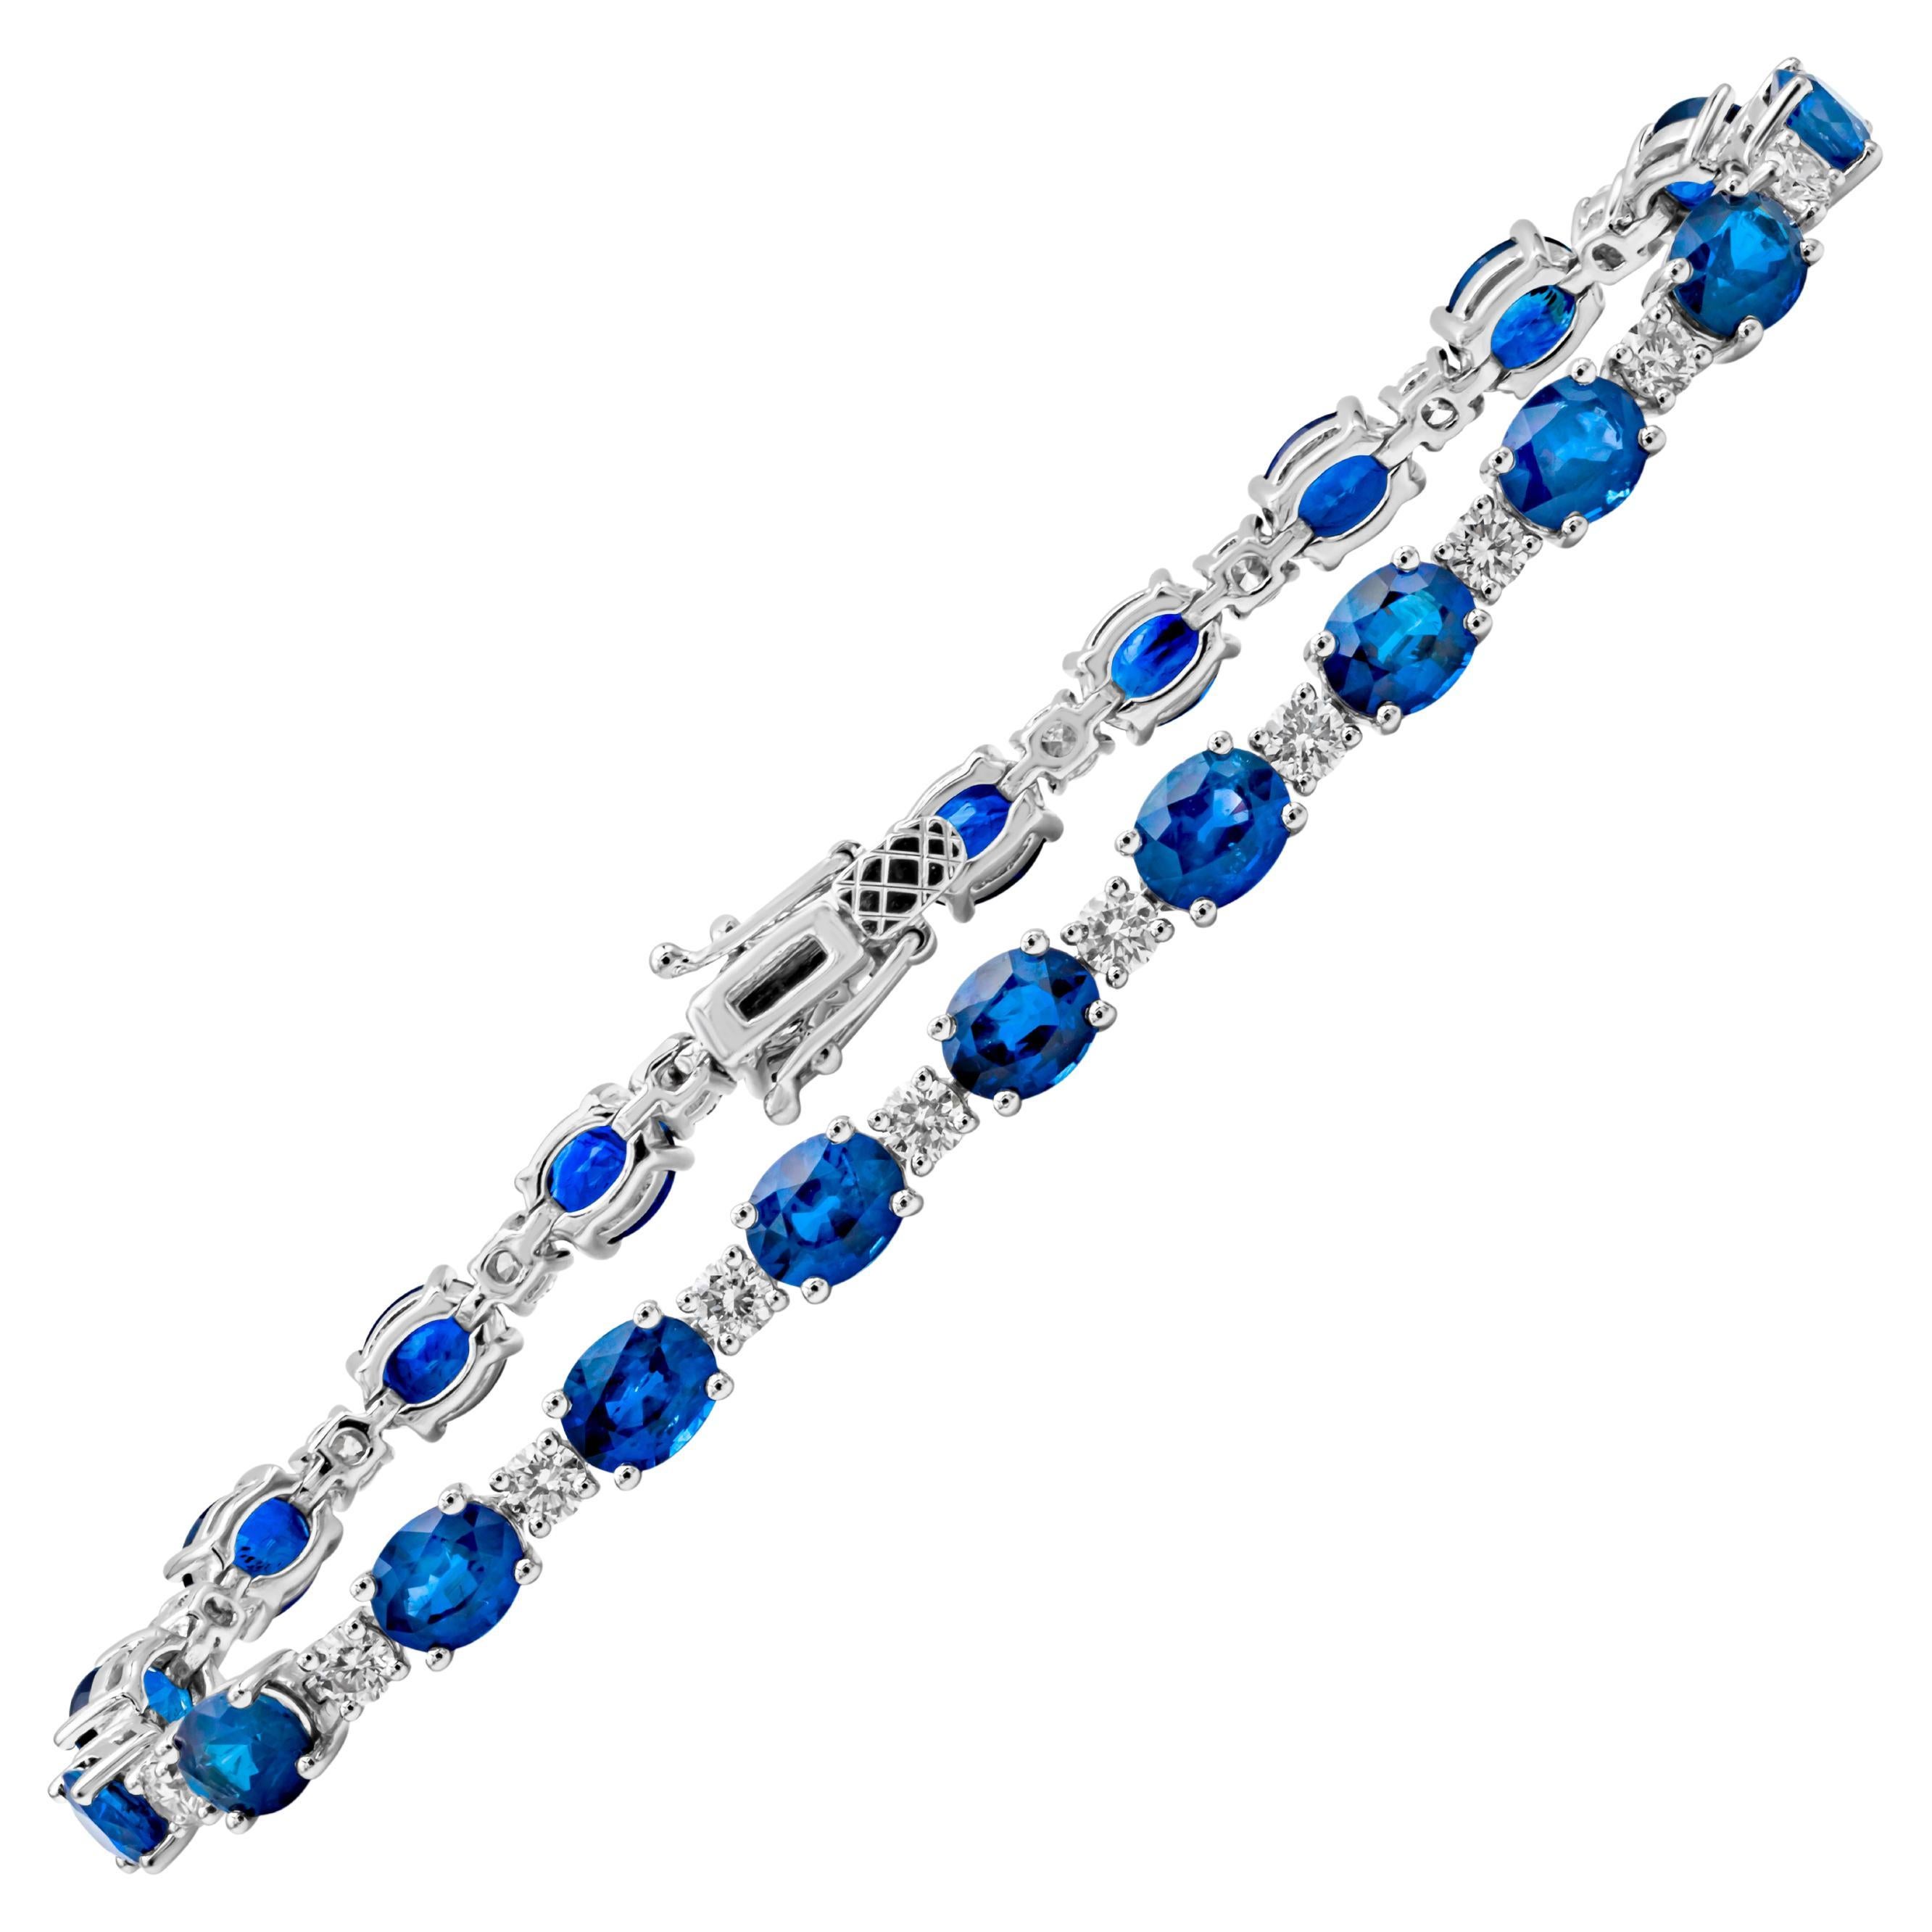 Roman Malakov 12.56 Carats Oval Cut Blue Sapphire with Diamond Tennis Bracelet